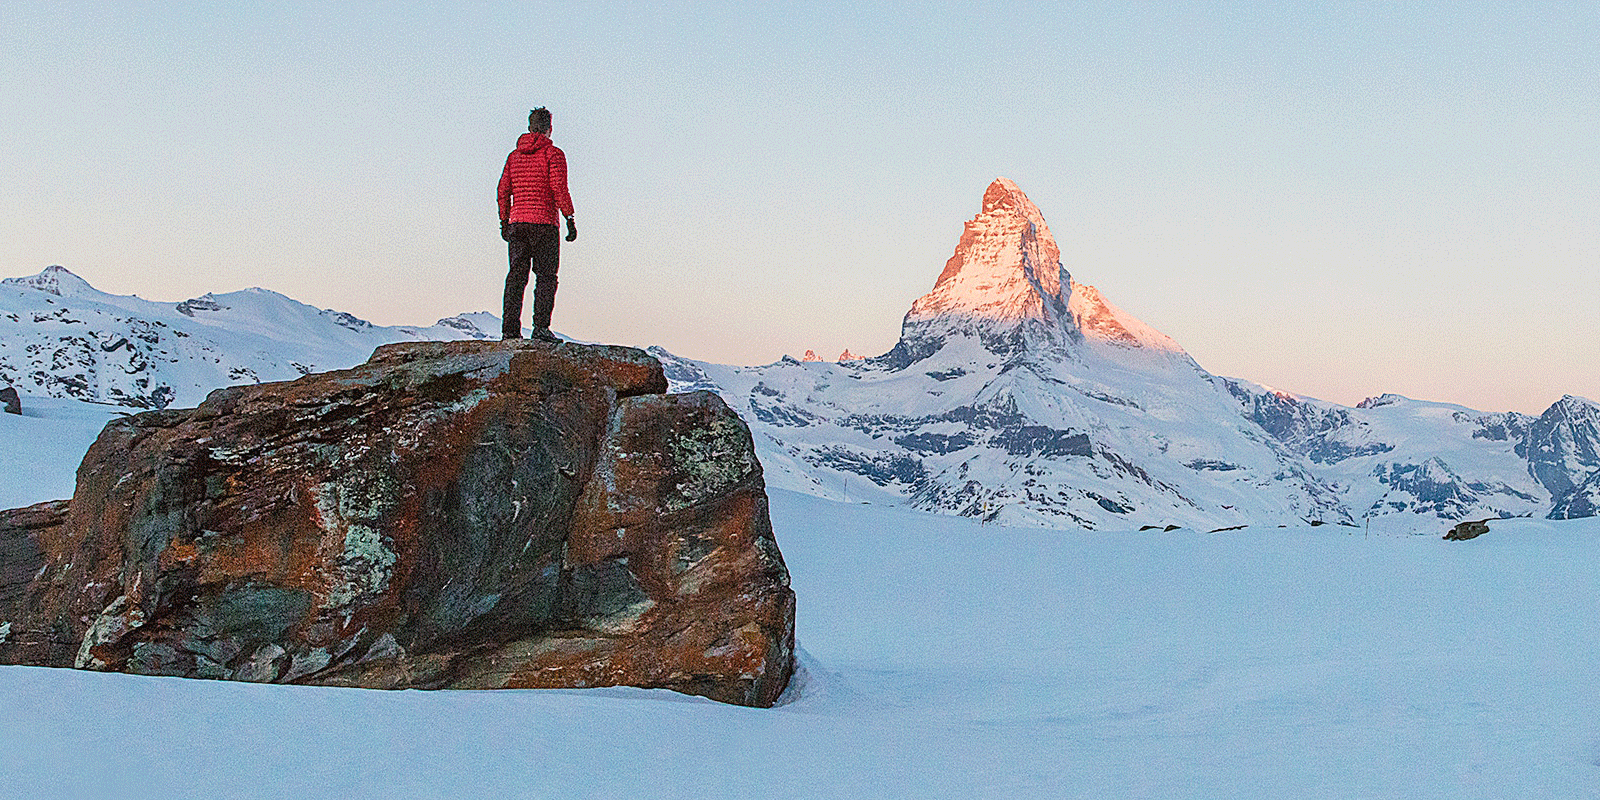 Man on mountain boulder in winter looking at mountain peak at sunrise